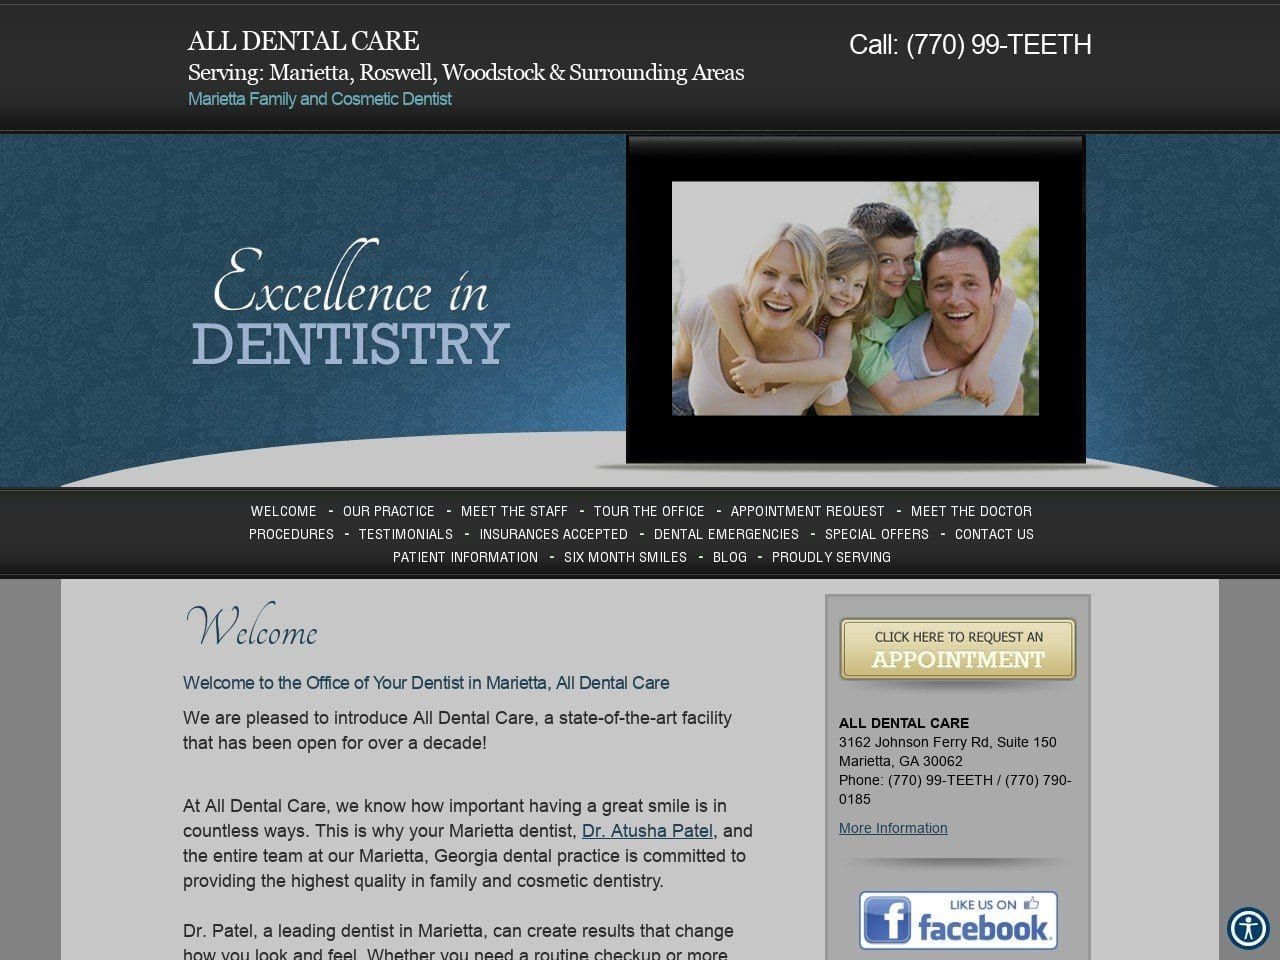 All Dental Care Website Screenshot from alldentalcareonline.com